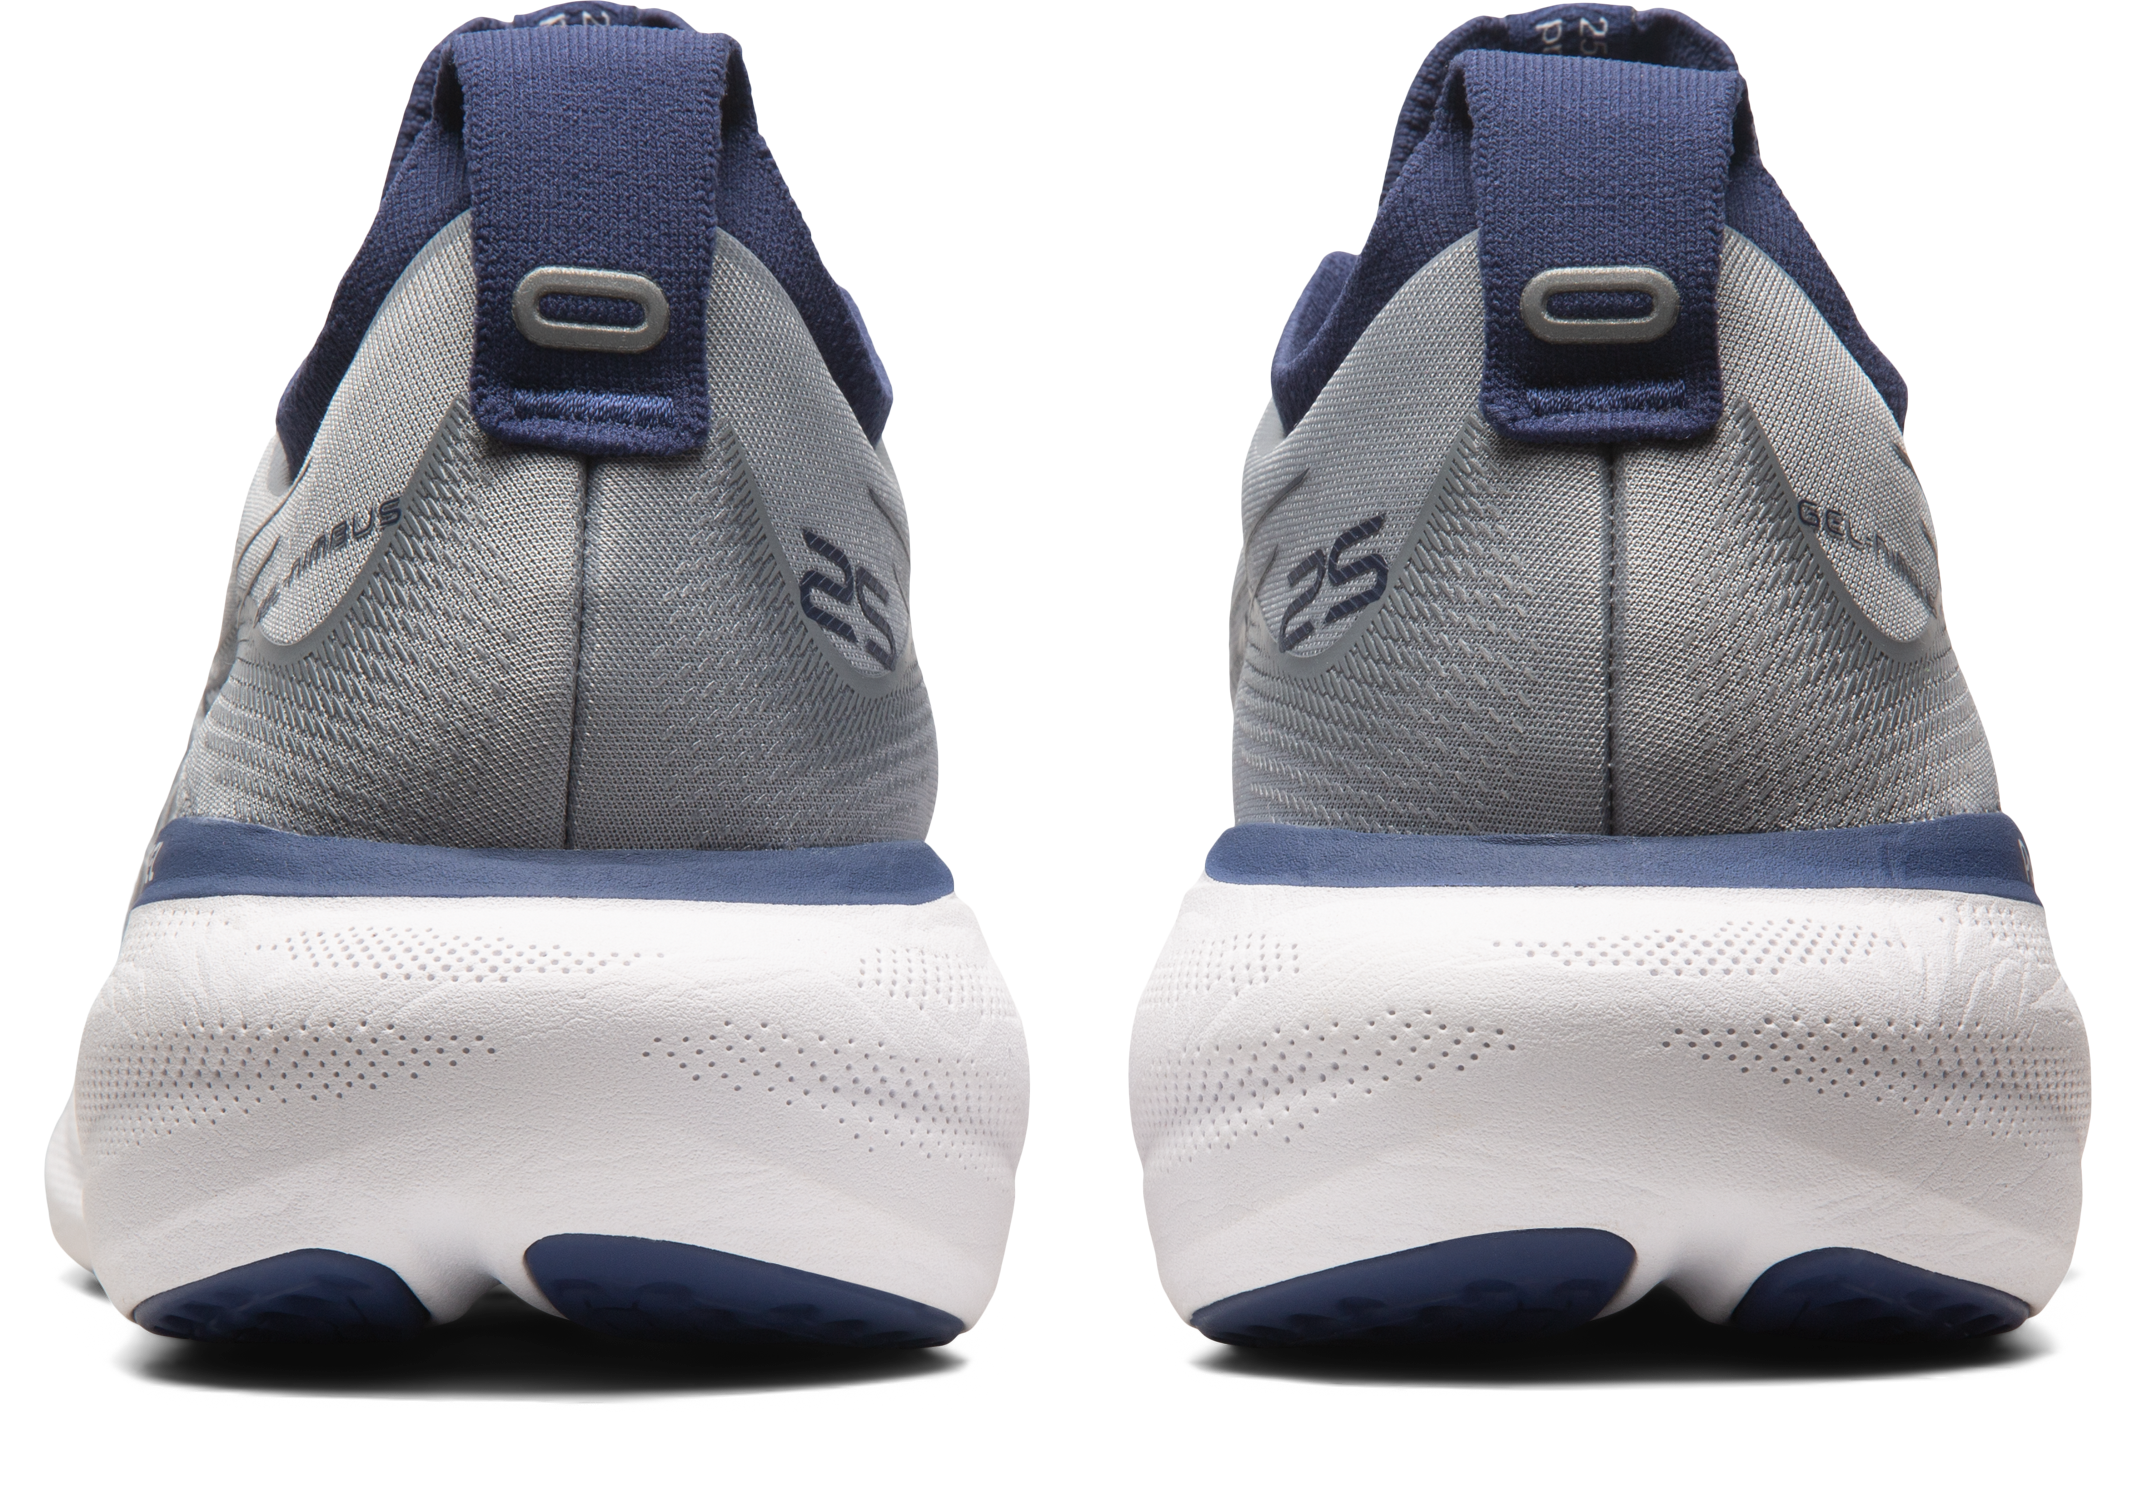 Asics Men's Gel-Nimbus 25 Wide (2E) Running Shoes in Sheet Rock/Indigo Blue